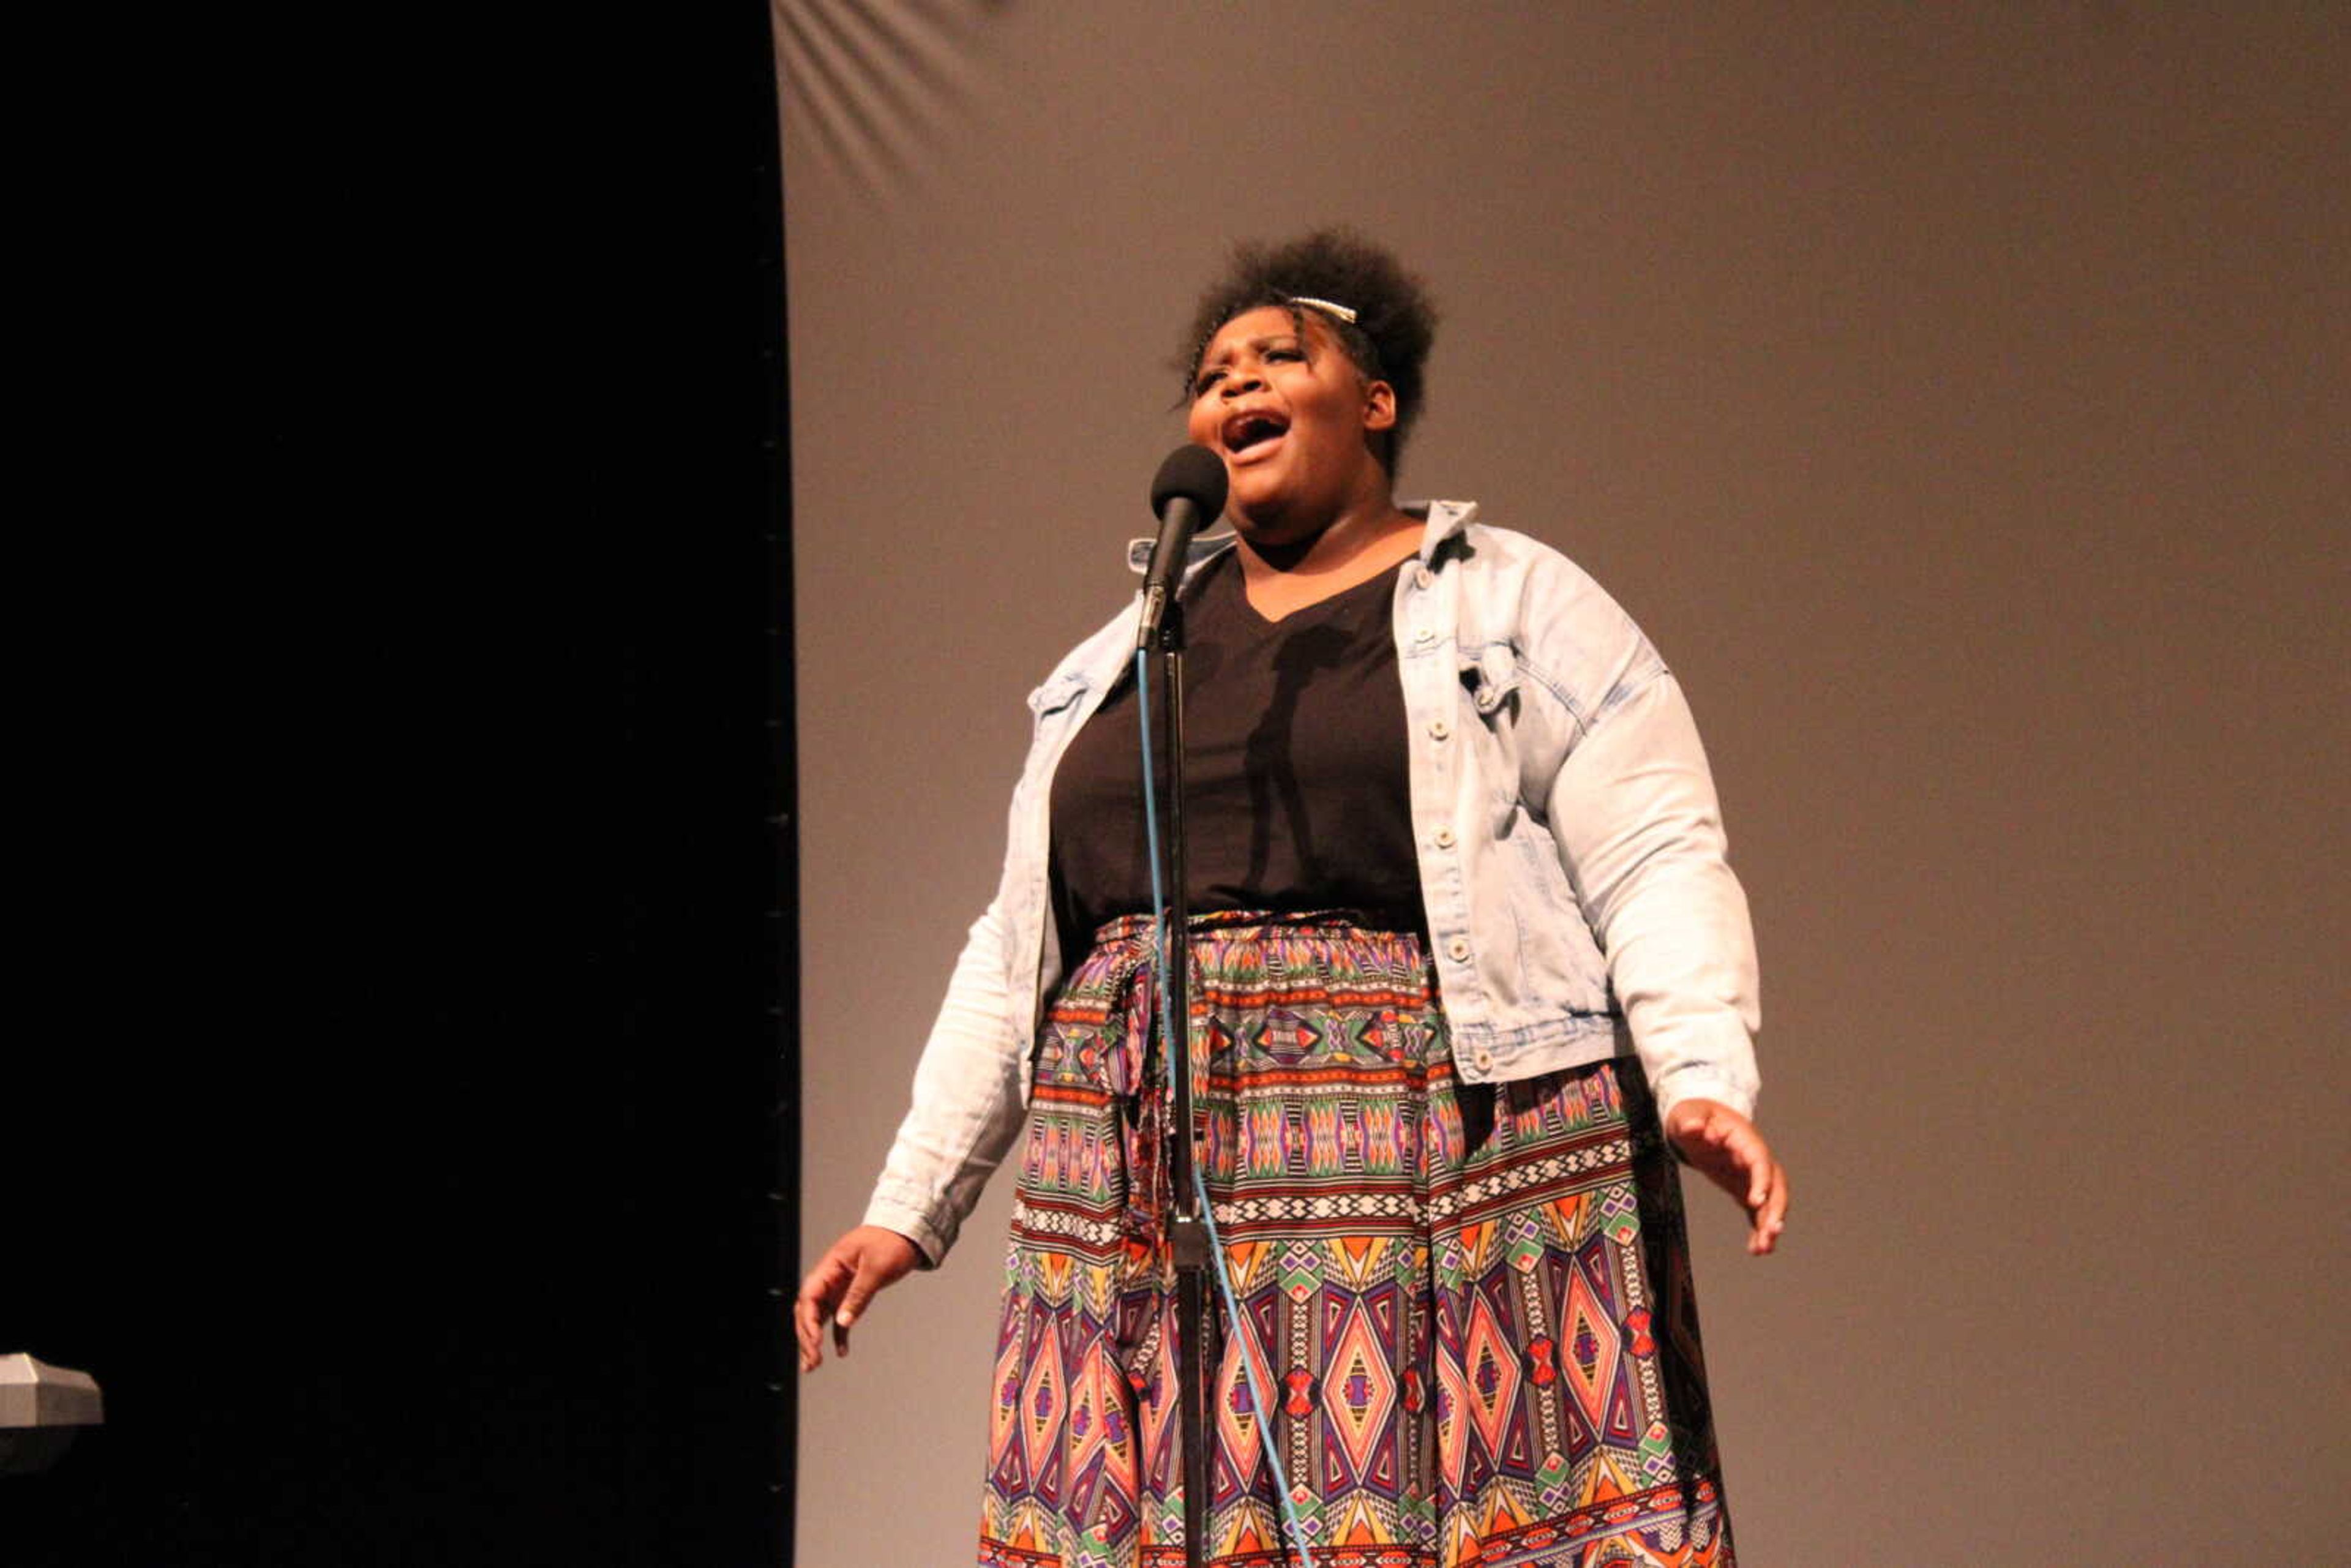 Southeast community performs at Bridges "Here/Hear Our Voices" diversity showcase